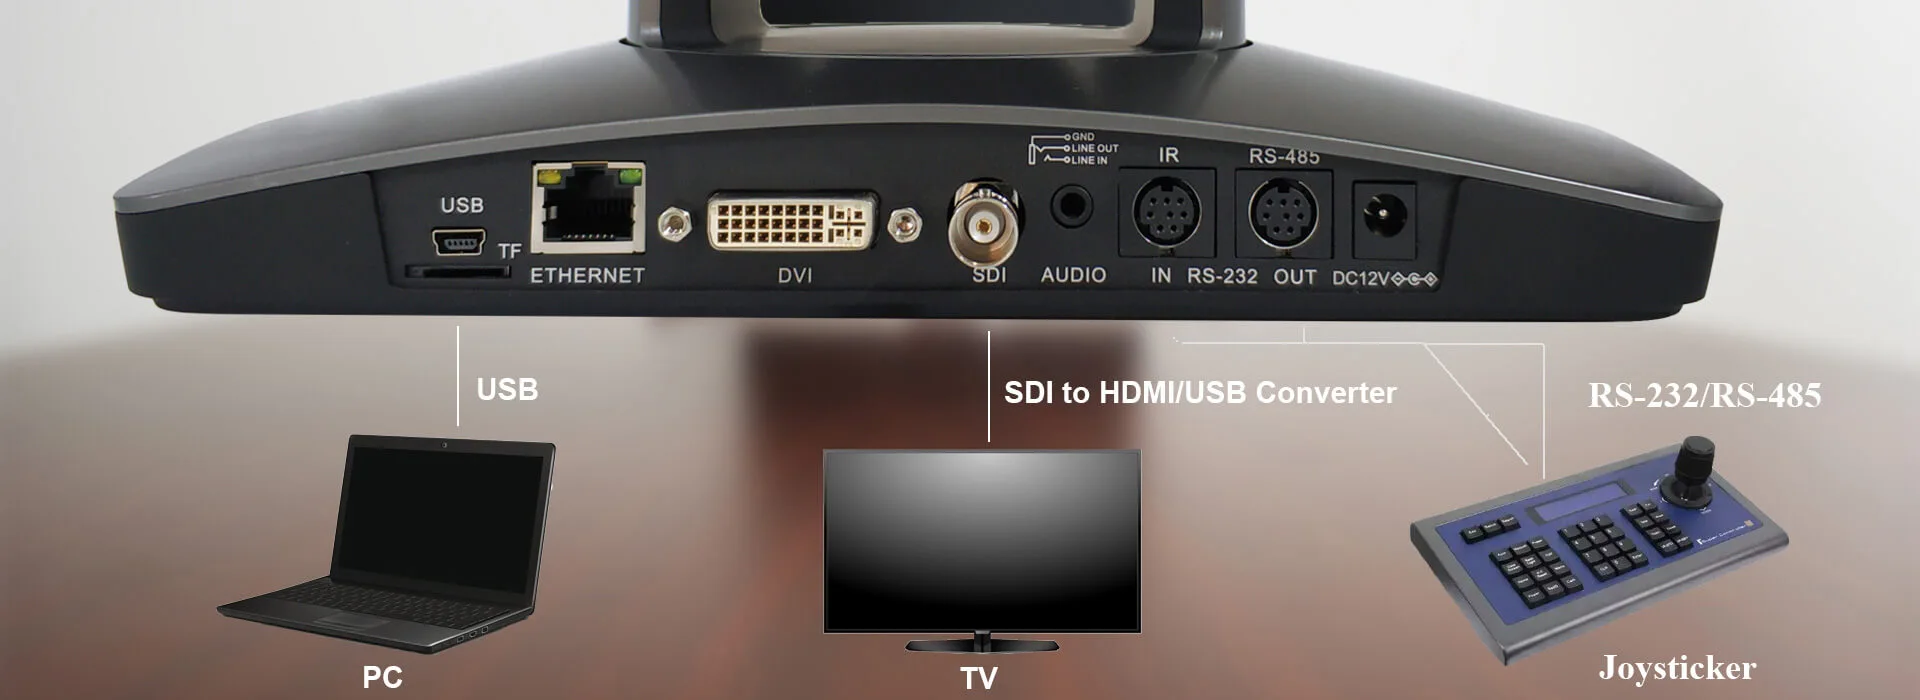 HD Conference Camera